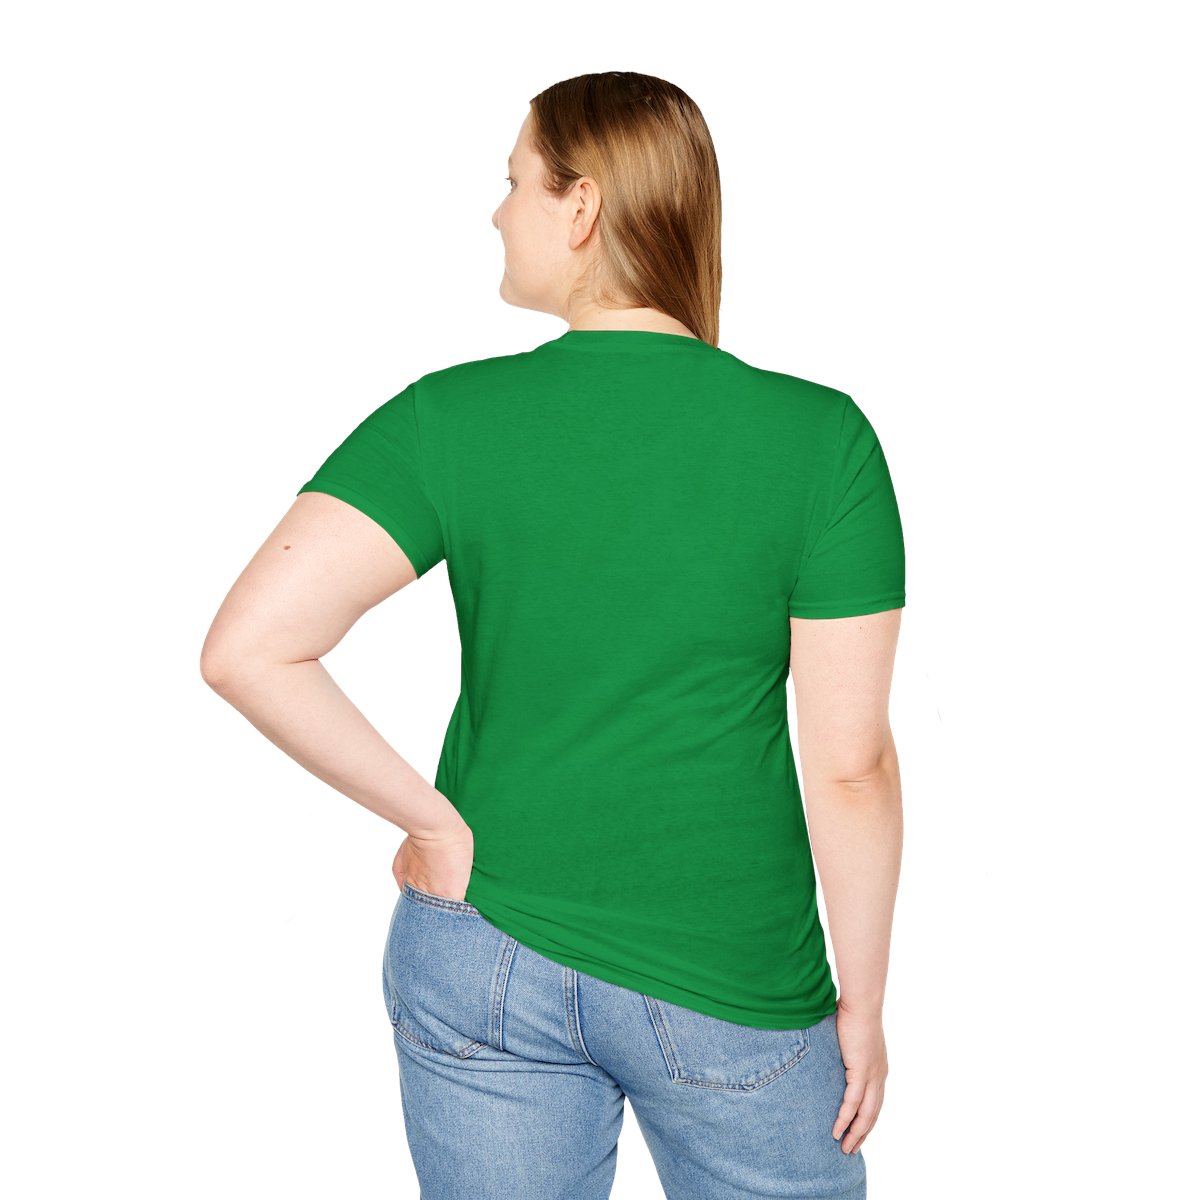 Happy St Patrick's Day, 0% Irish Celebration Tee!  - T-Shirt product thumbnail image